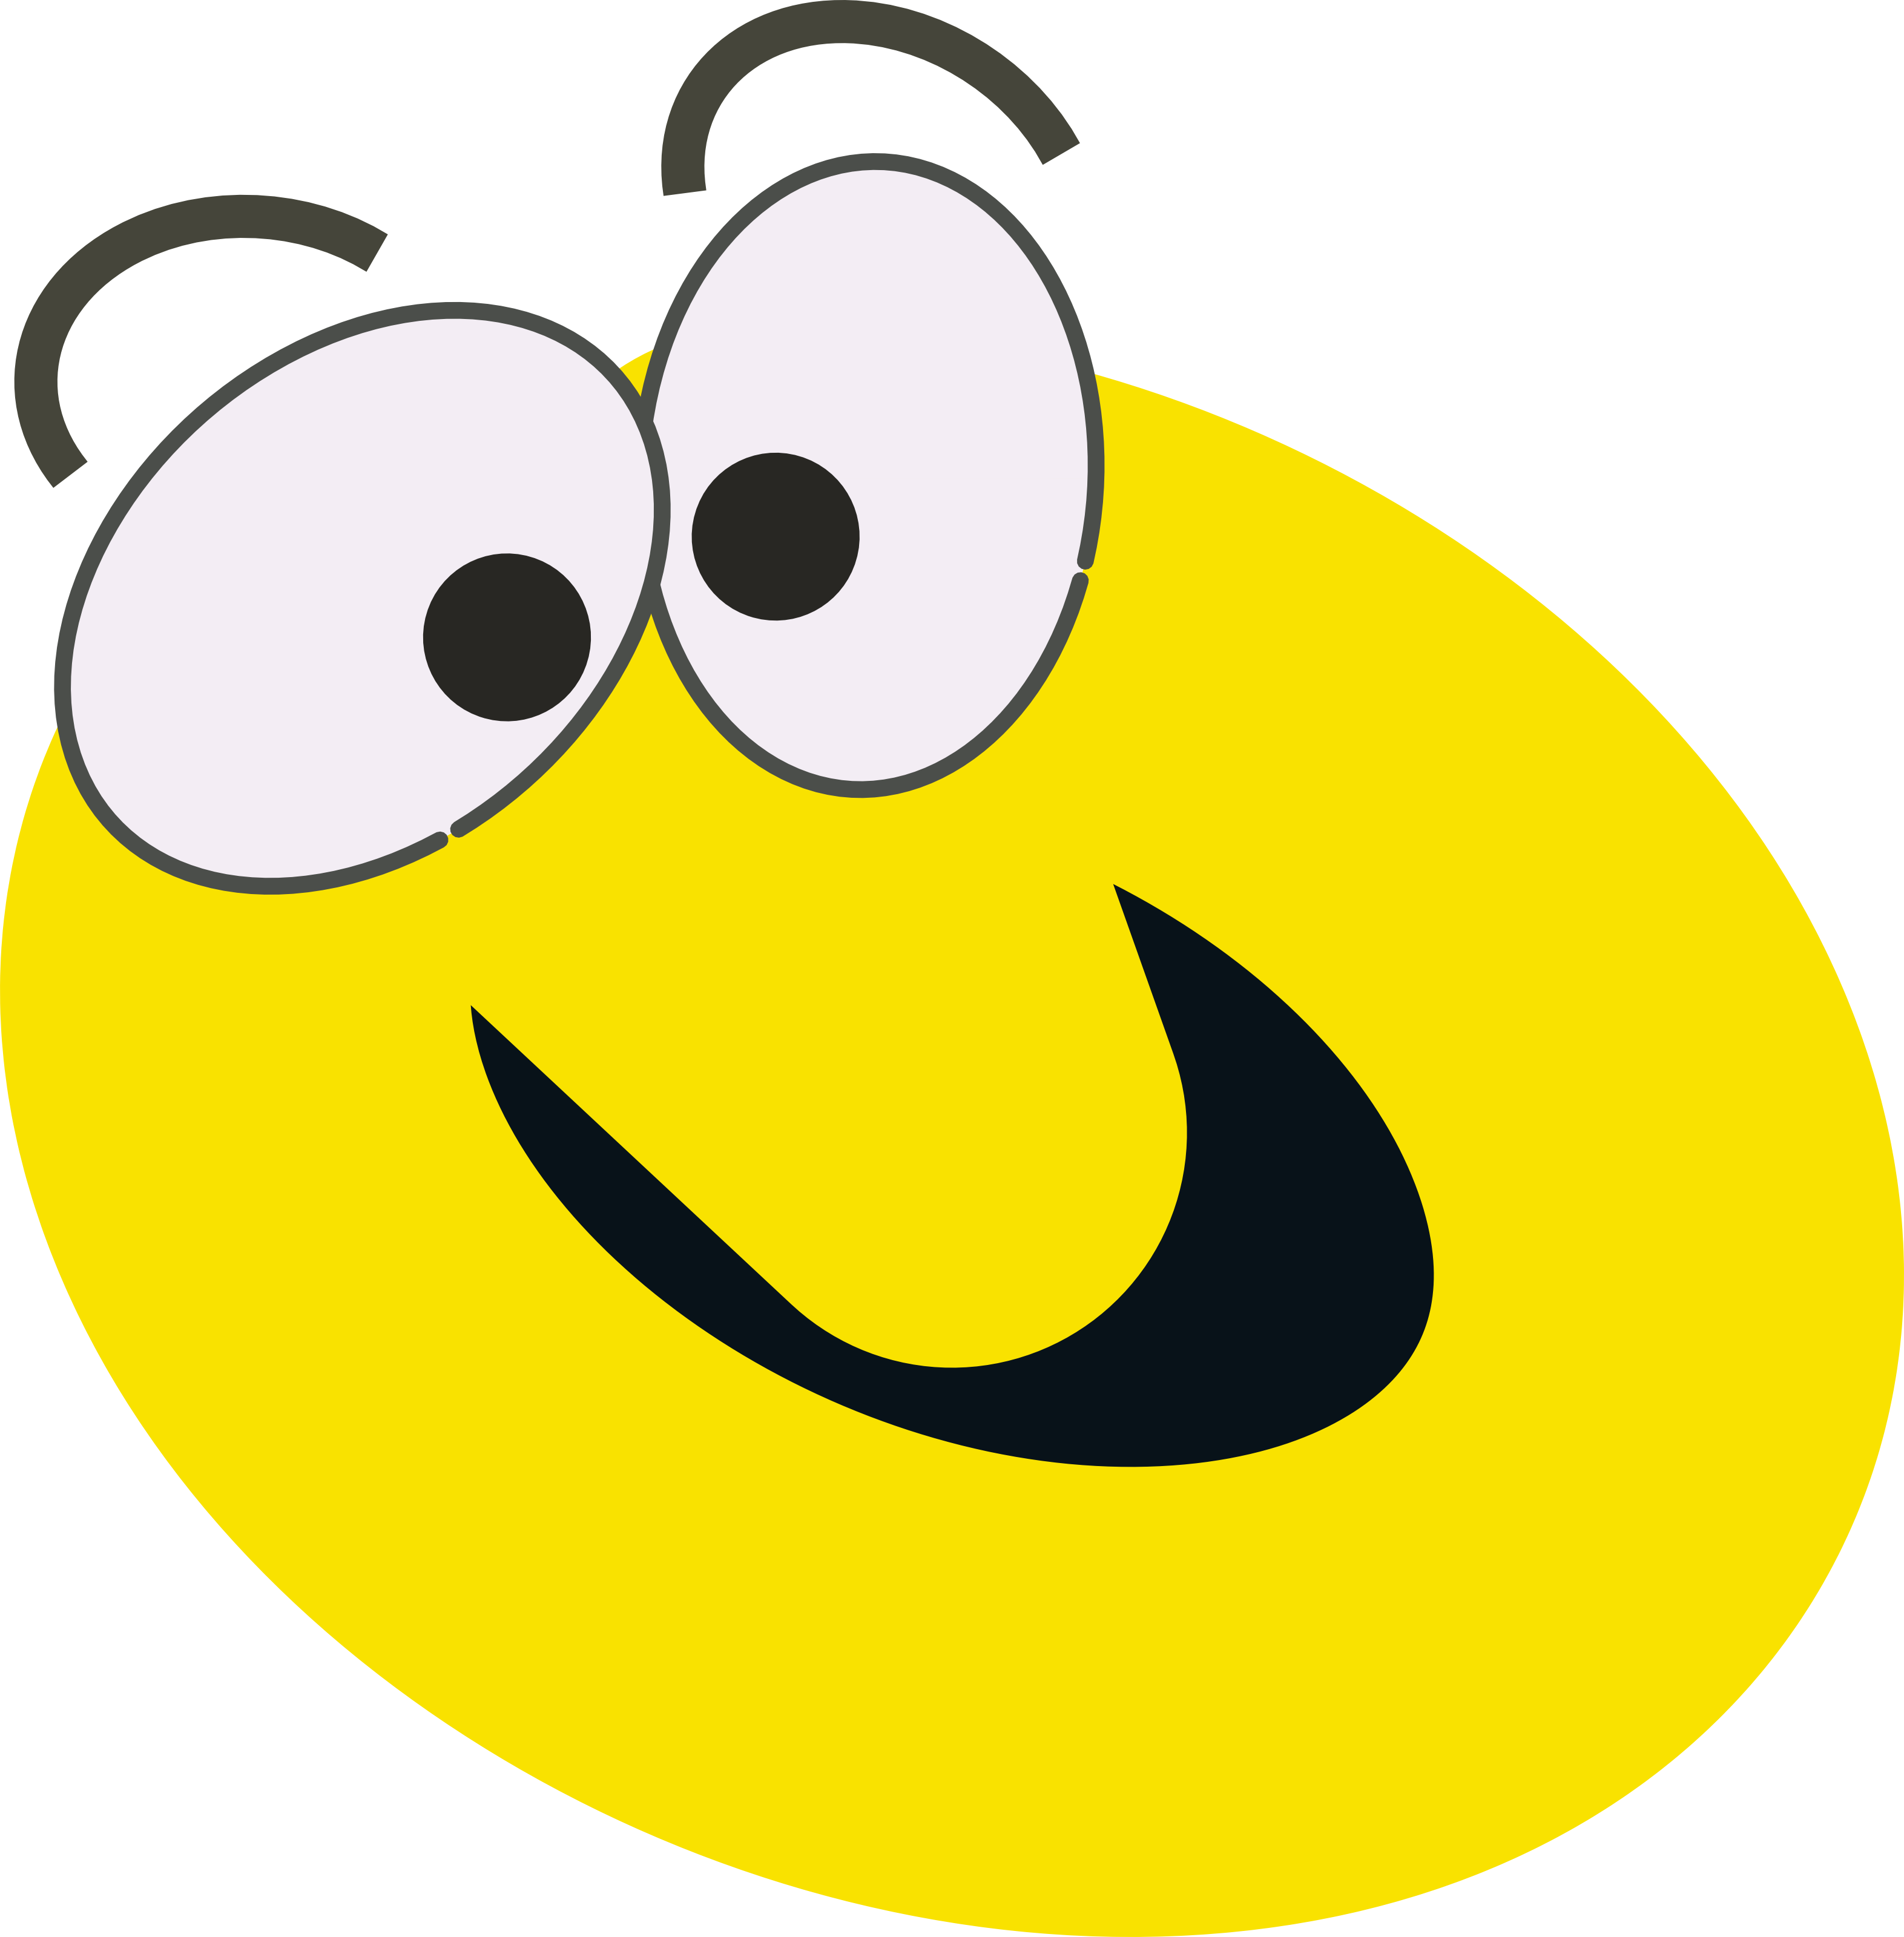 Smiley face clip art free download - ClipartFox